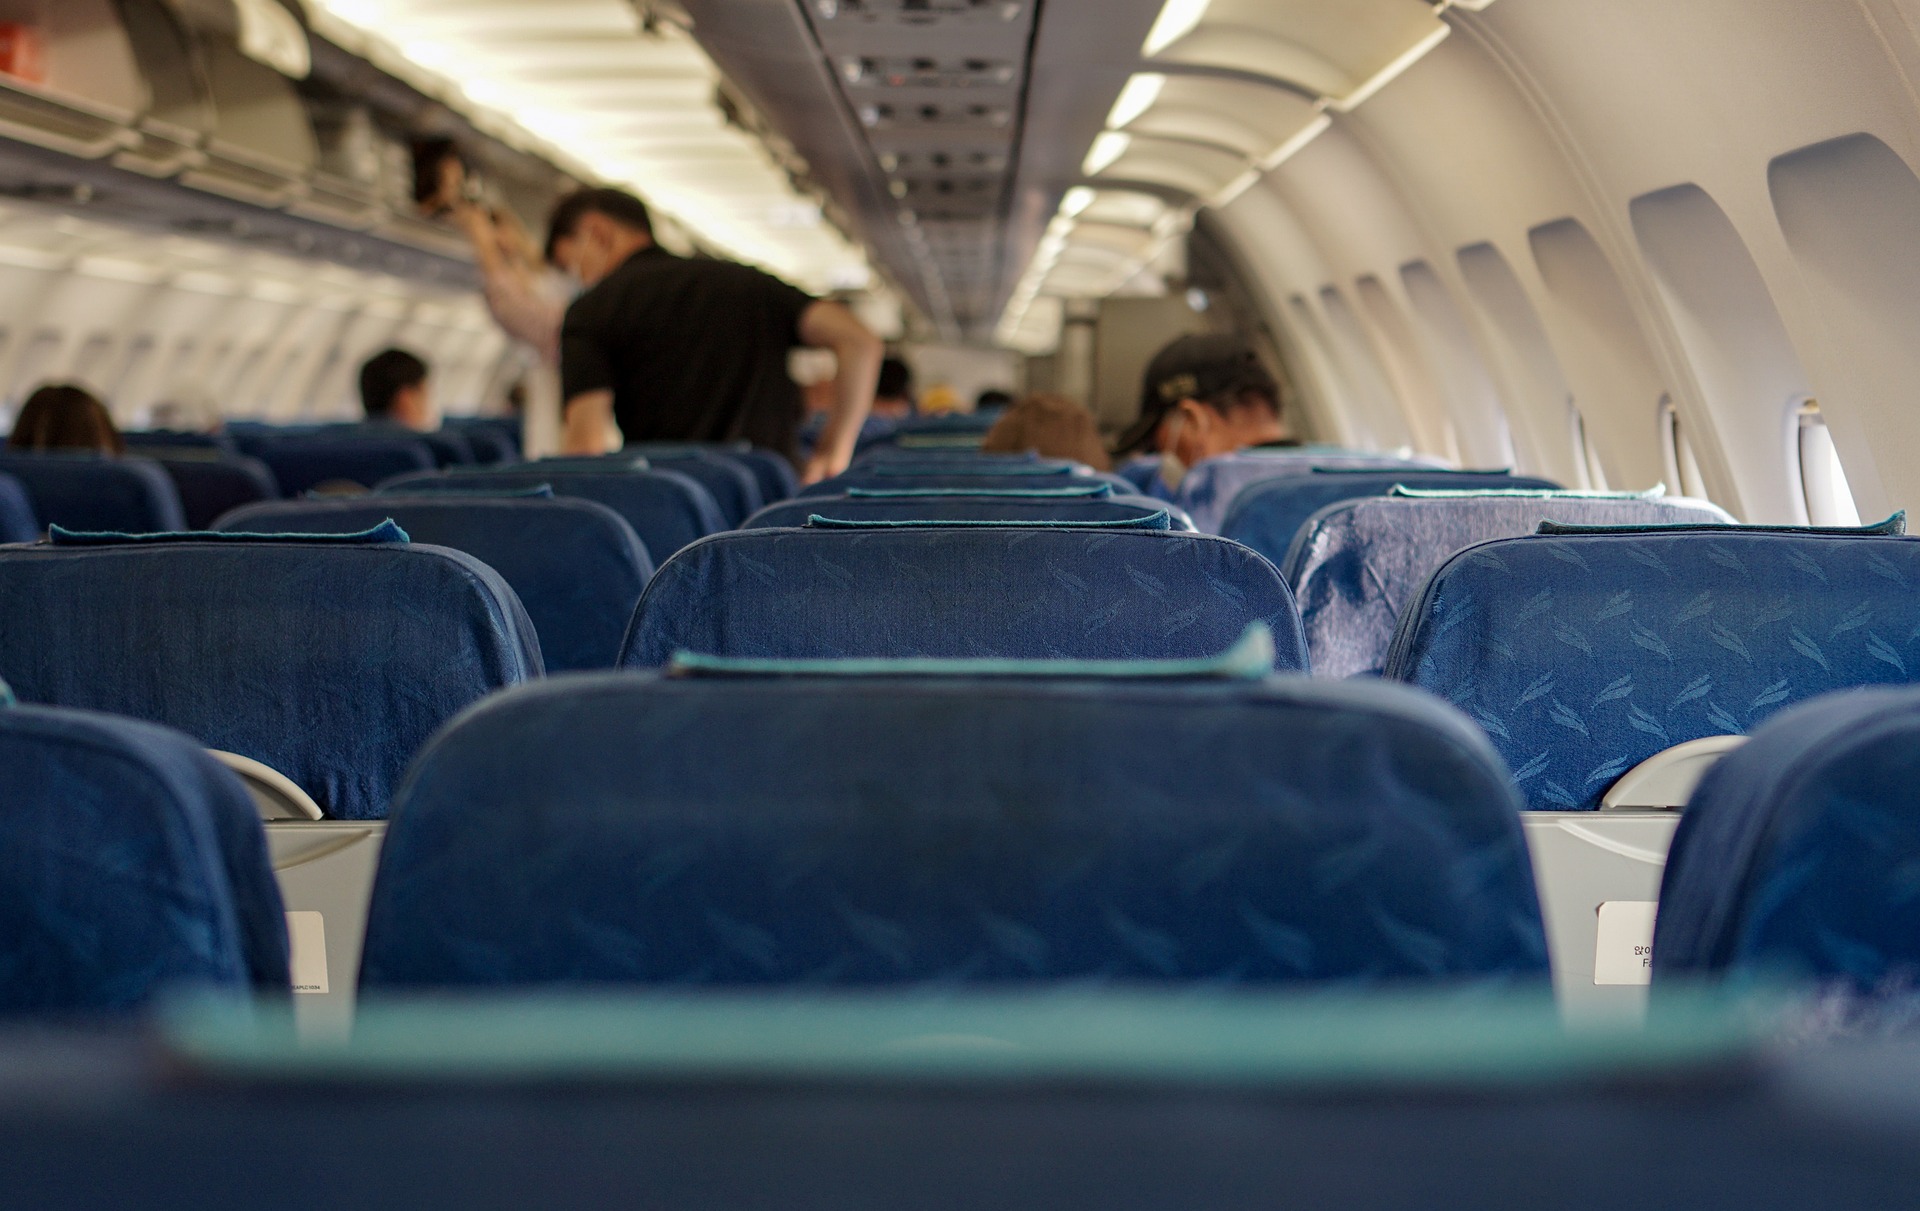 Vuelo de Delta Airlines a Barcelona regresa a tierra debido a un pasajero con "diarrea incontrolable"